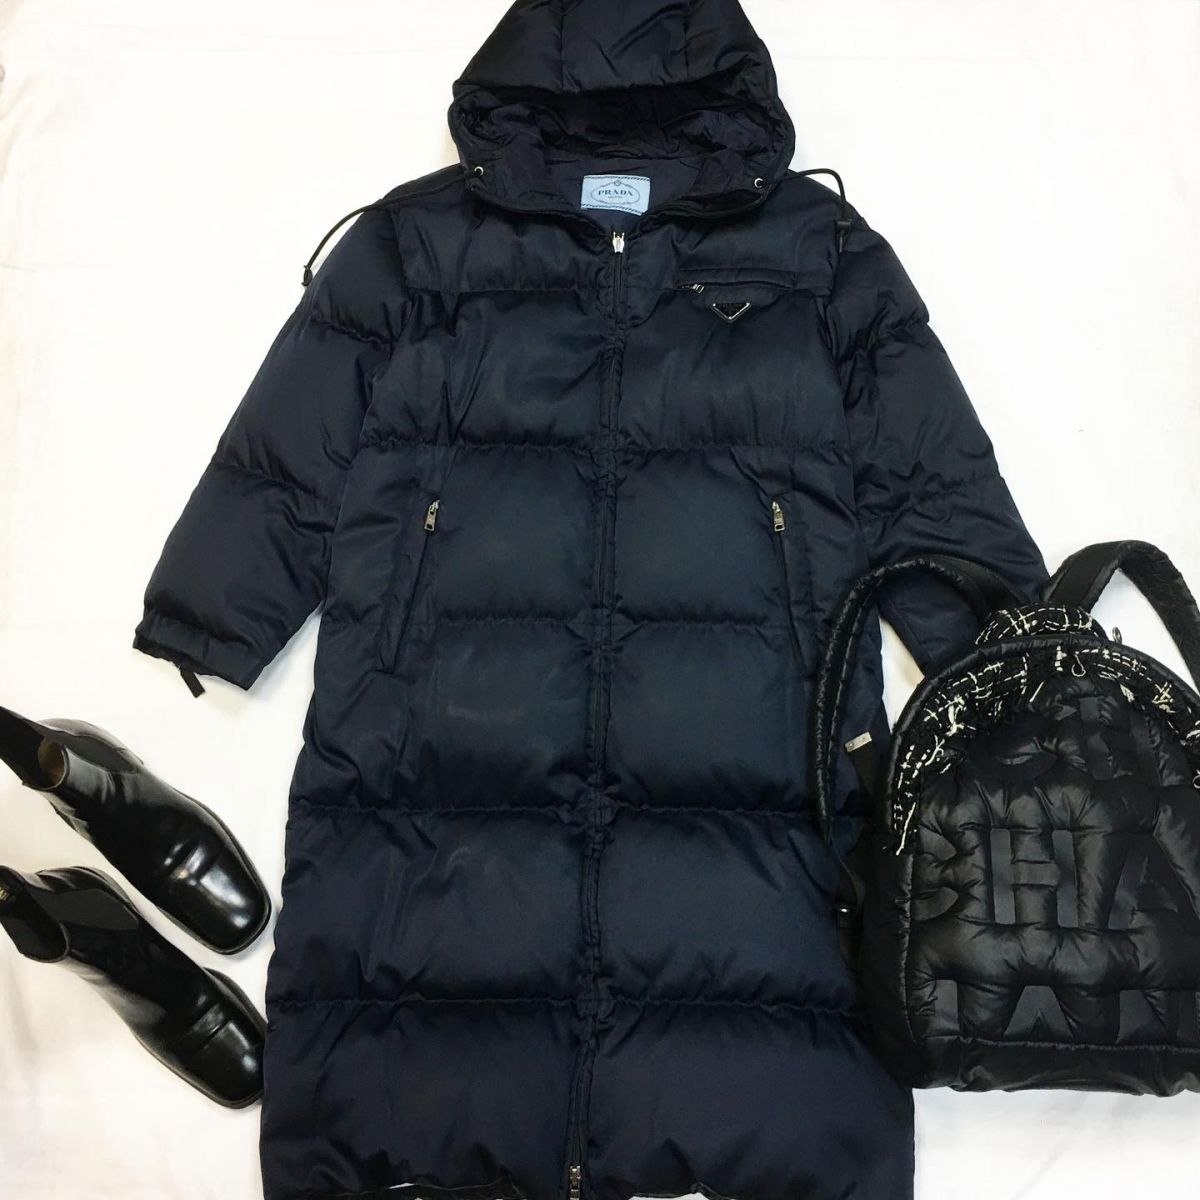 Пуховик - Пальто Prada размер 38/42 цена 107 693 руб Рюкзак Chanel 